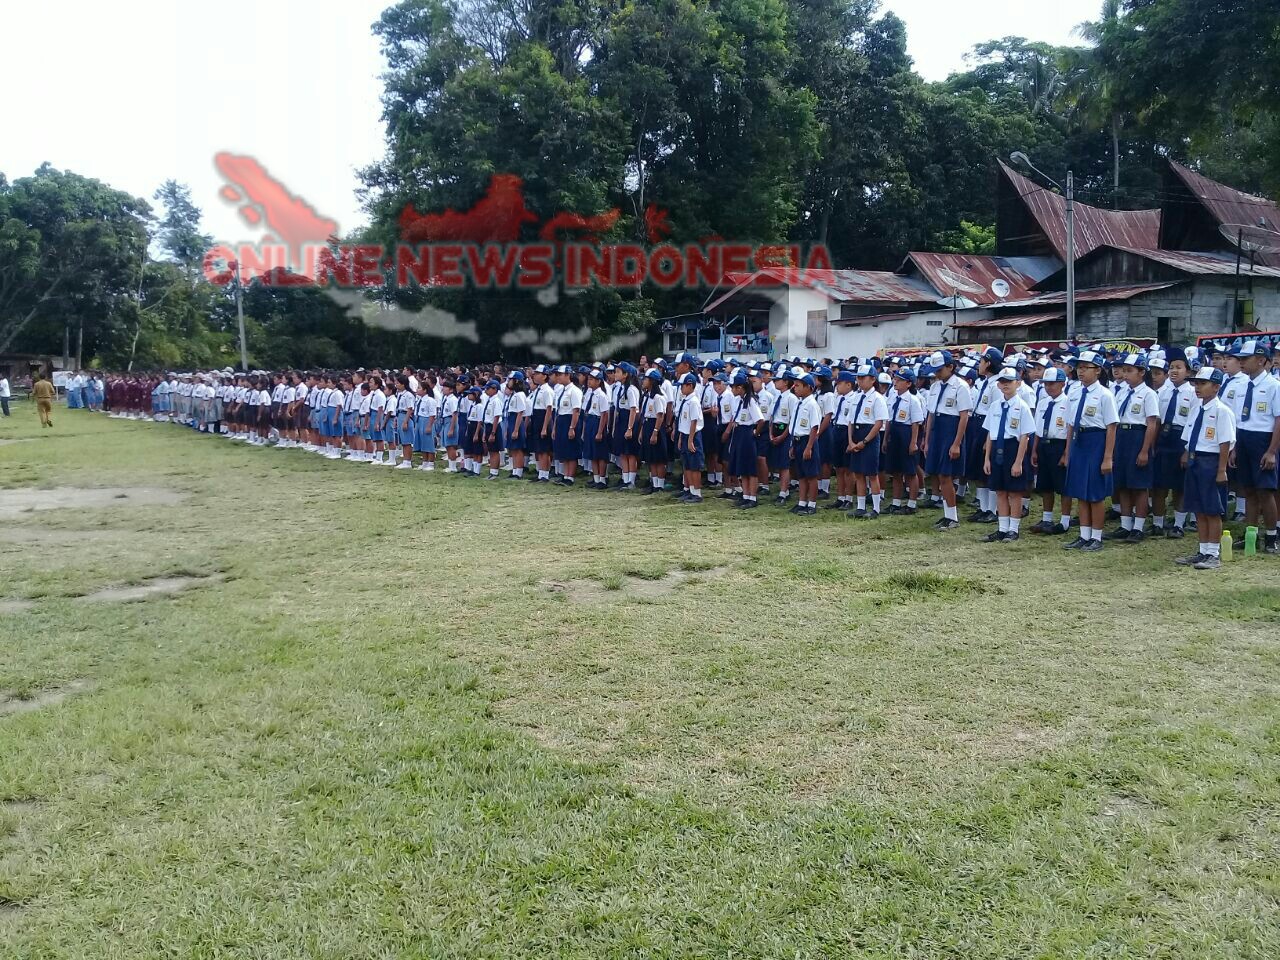 Foto : Para pelajar tingkat SD, SMP, SMA/SMK, ikuti upacara Hardiknas 2018 di Tanah Lapanh Onan Lama Pangururan Samosir, Rabu (02/05)